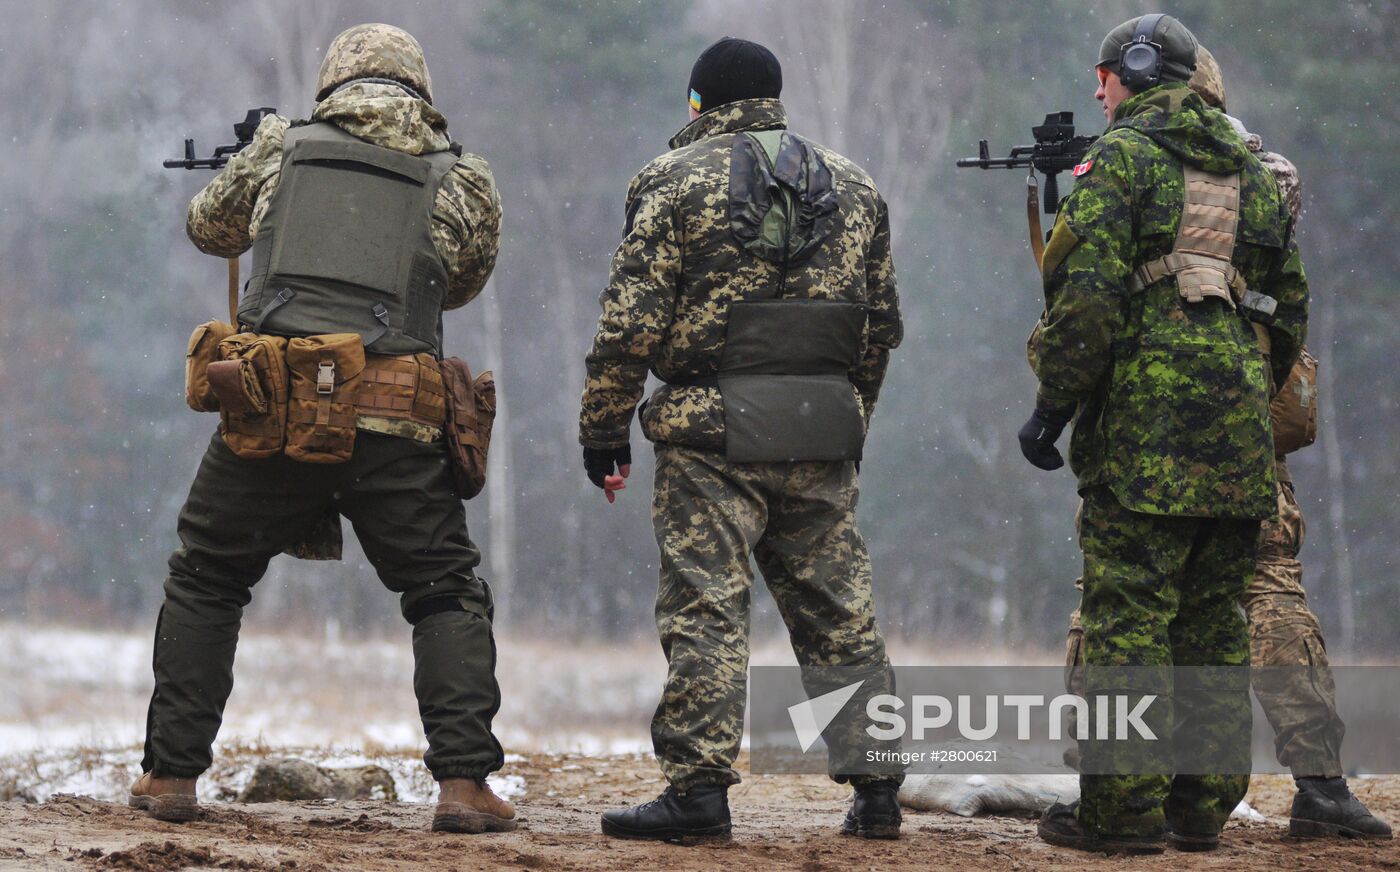 Canadian instructors train Ukrainian service persons as part of UNIFIER operation at Yavorivsky range